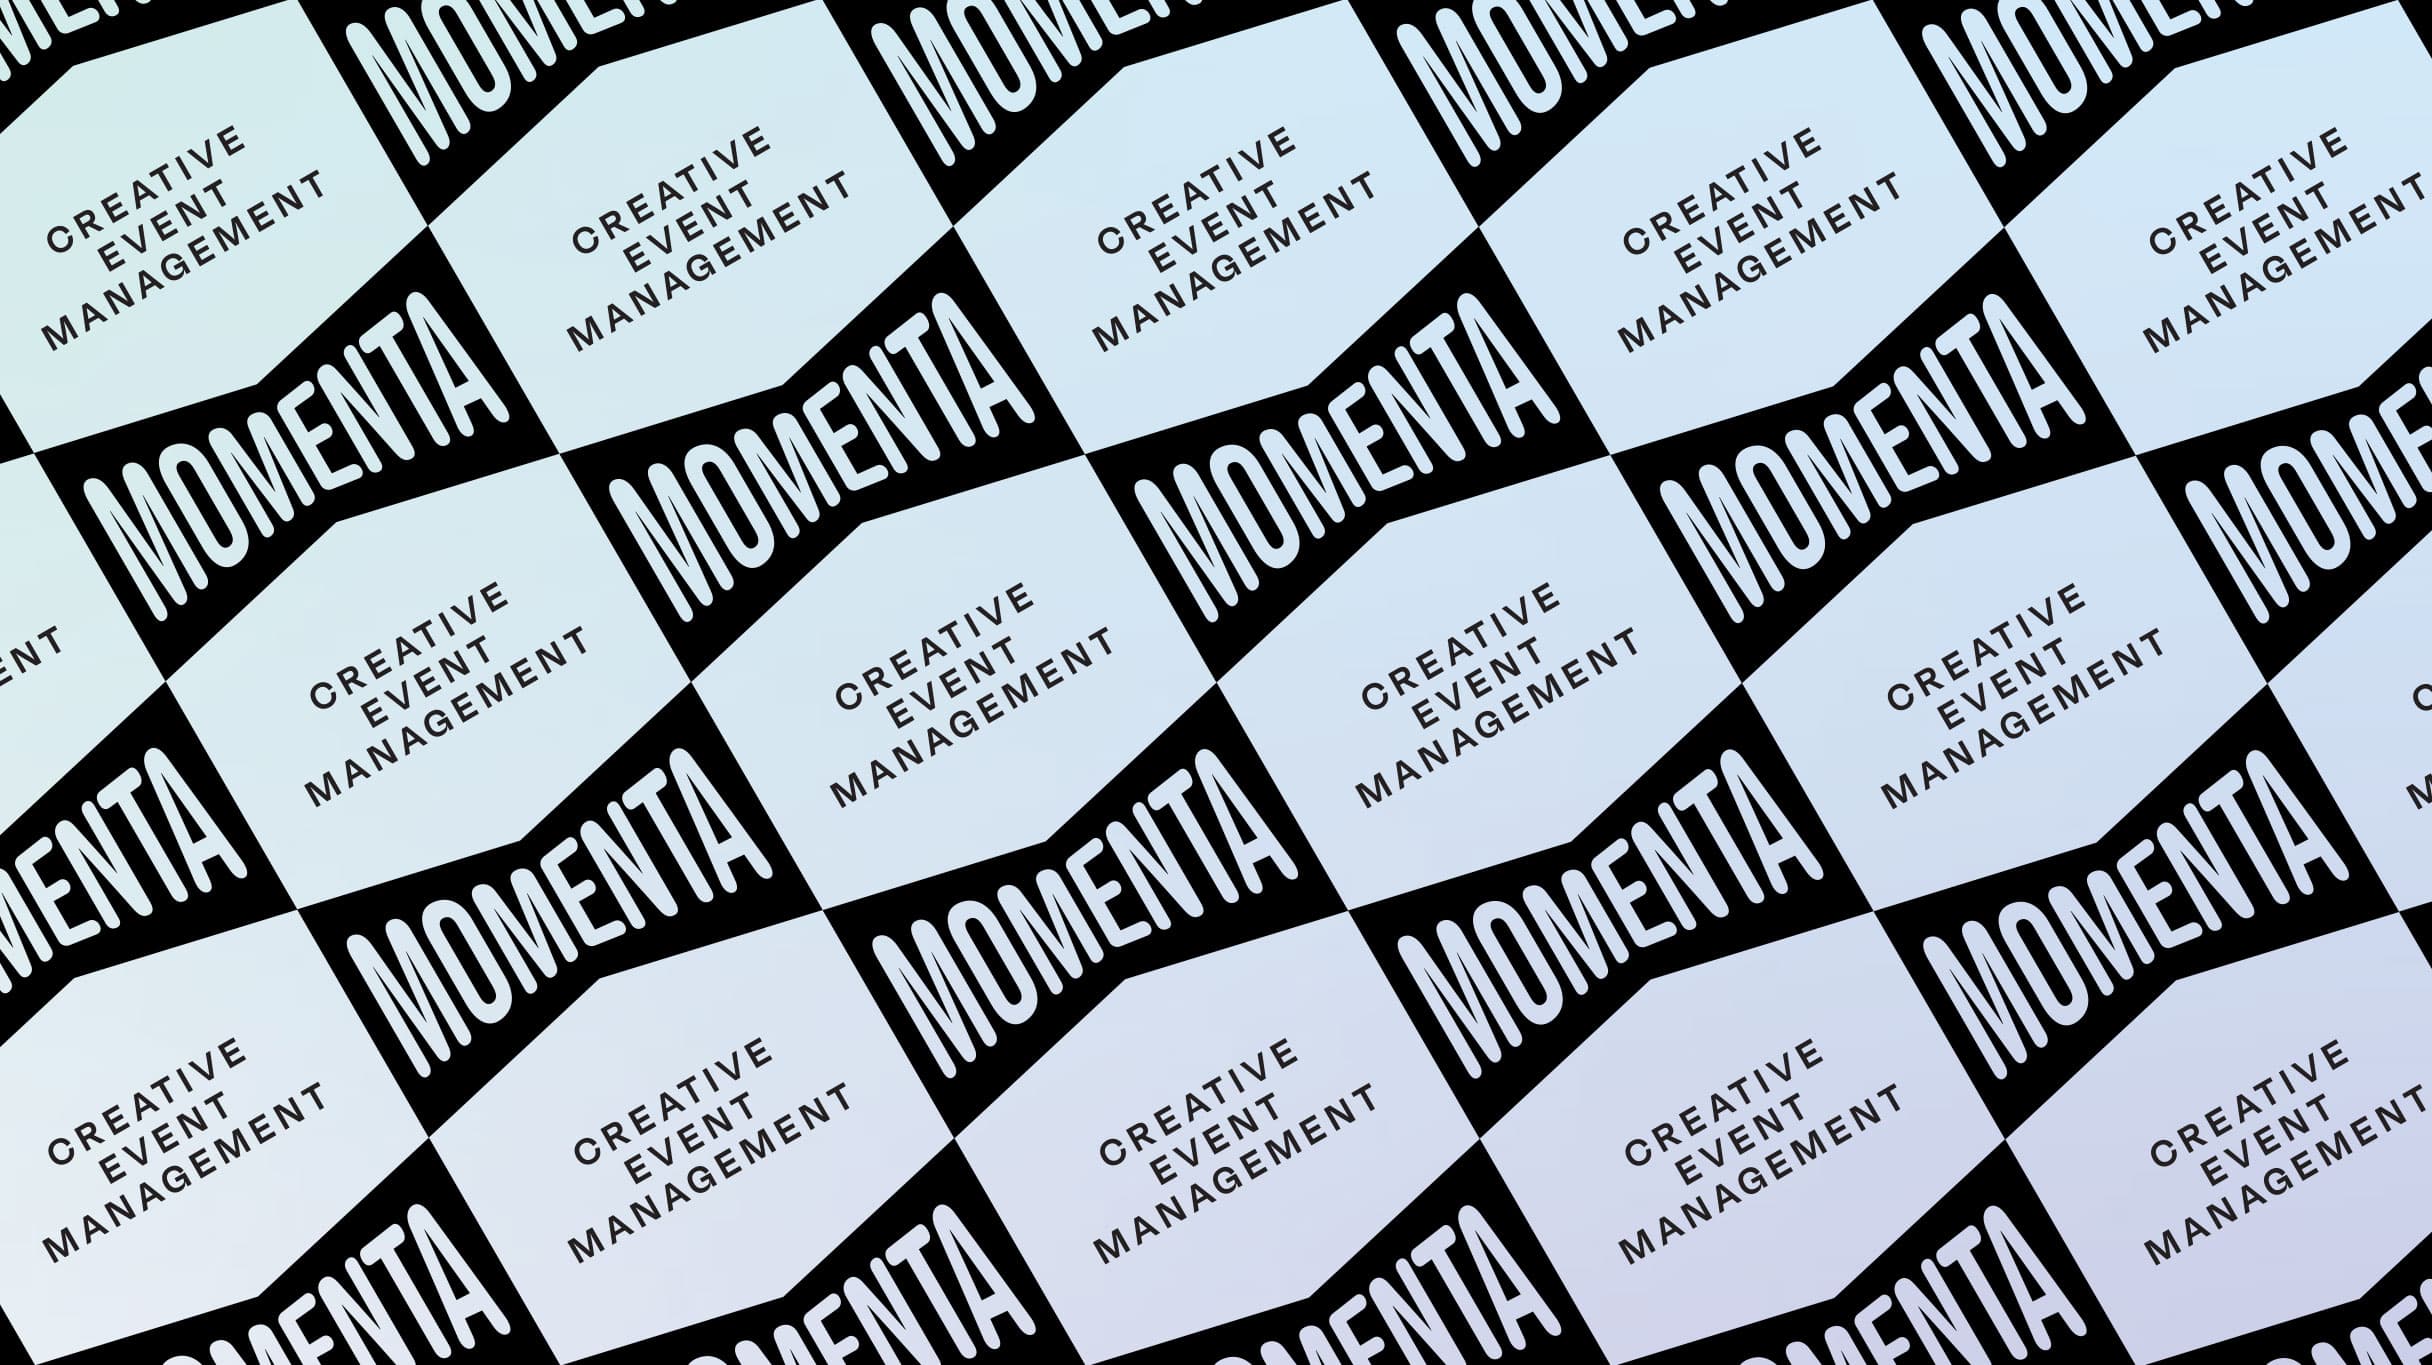 Momenta -  Branding, Verbalni identitet, vizualni identitet